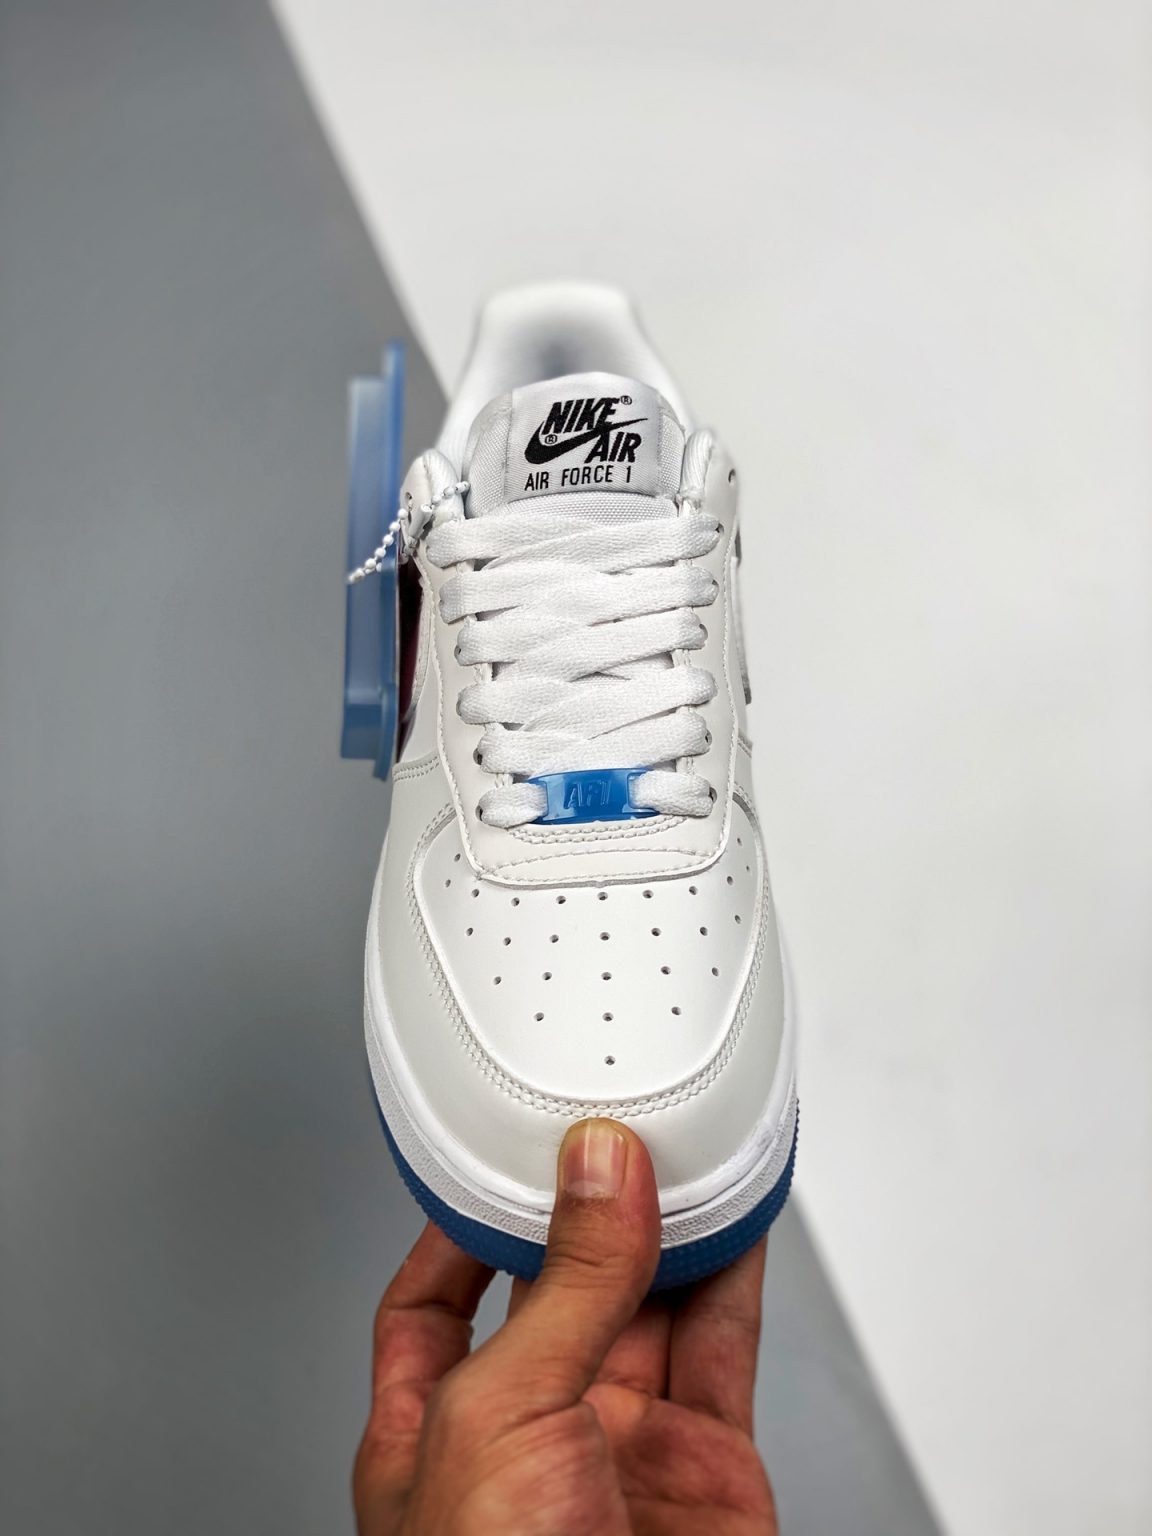 Nike Air Force 1 Low UV White/University Blue-Black-White For Sale ...